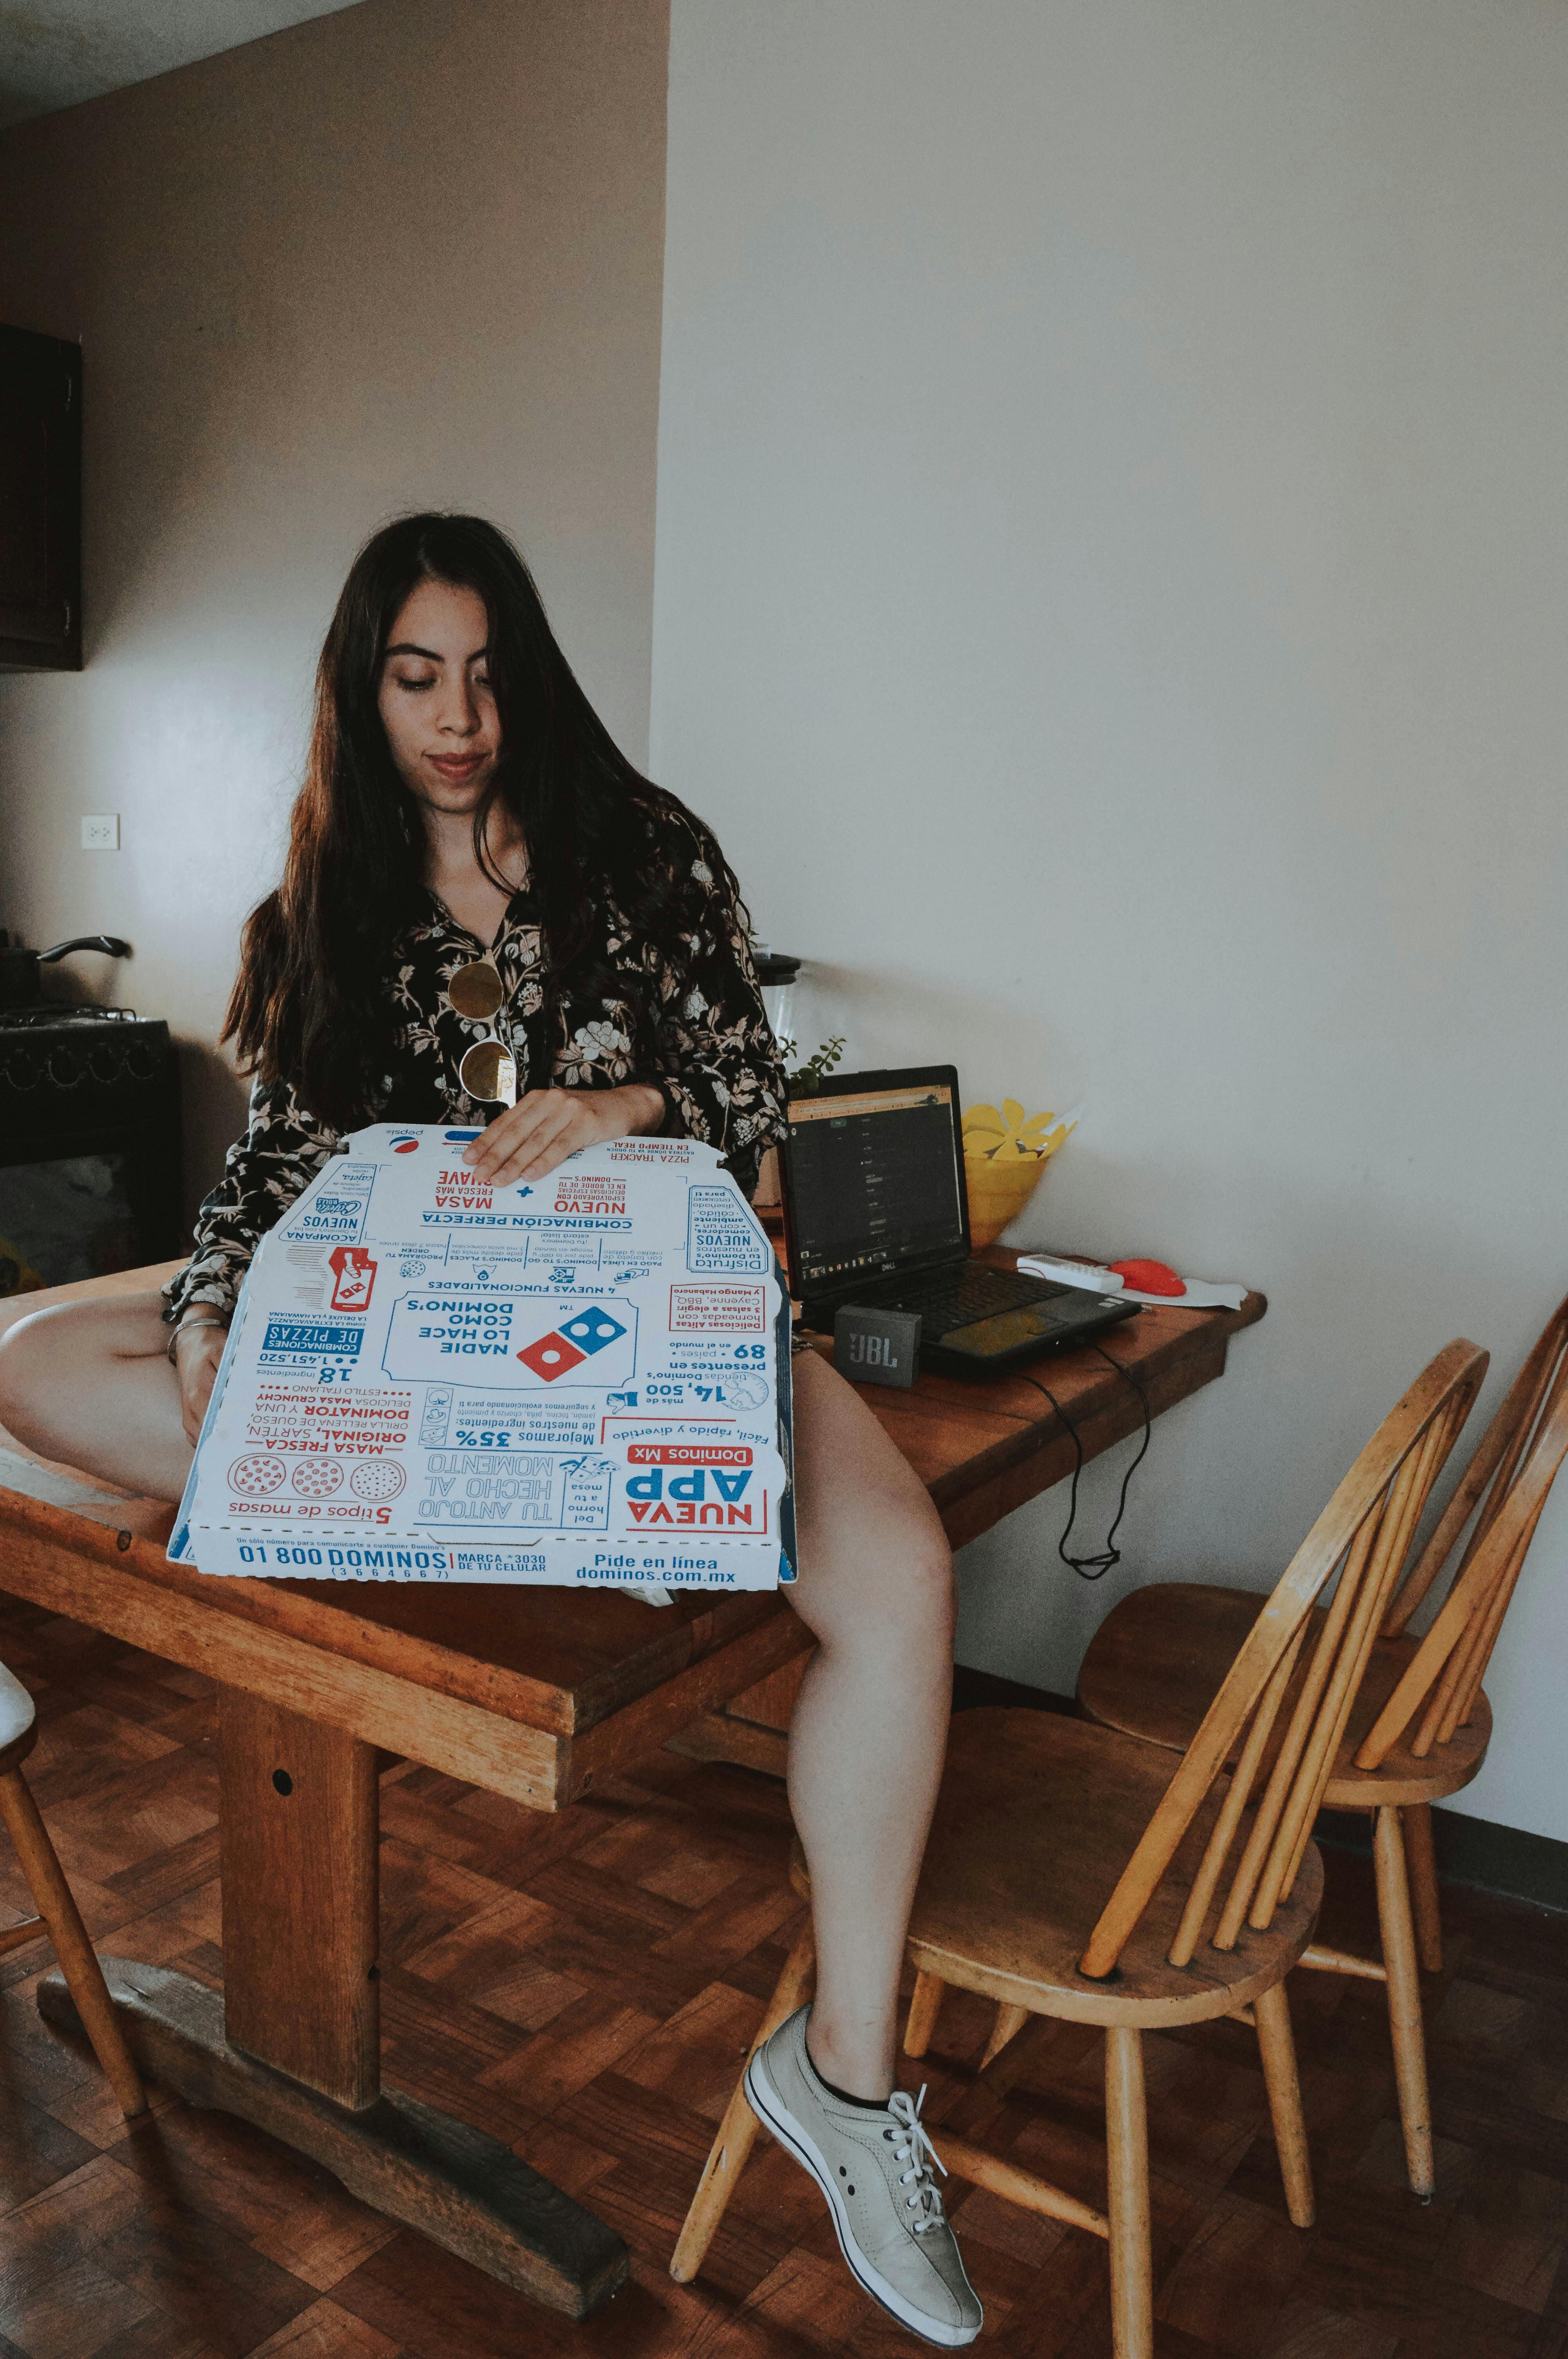 Woman Wearing Black Long-sleeved Shirt Holding Dominoes Pizza Box